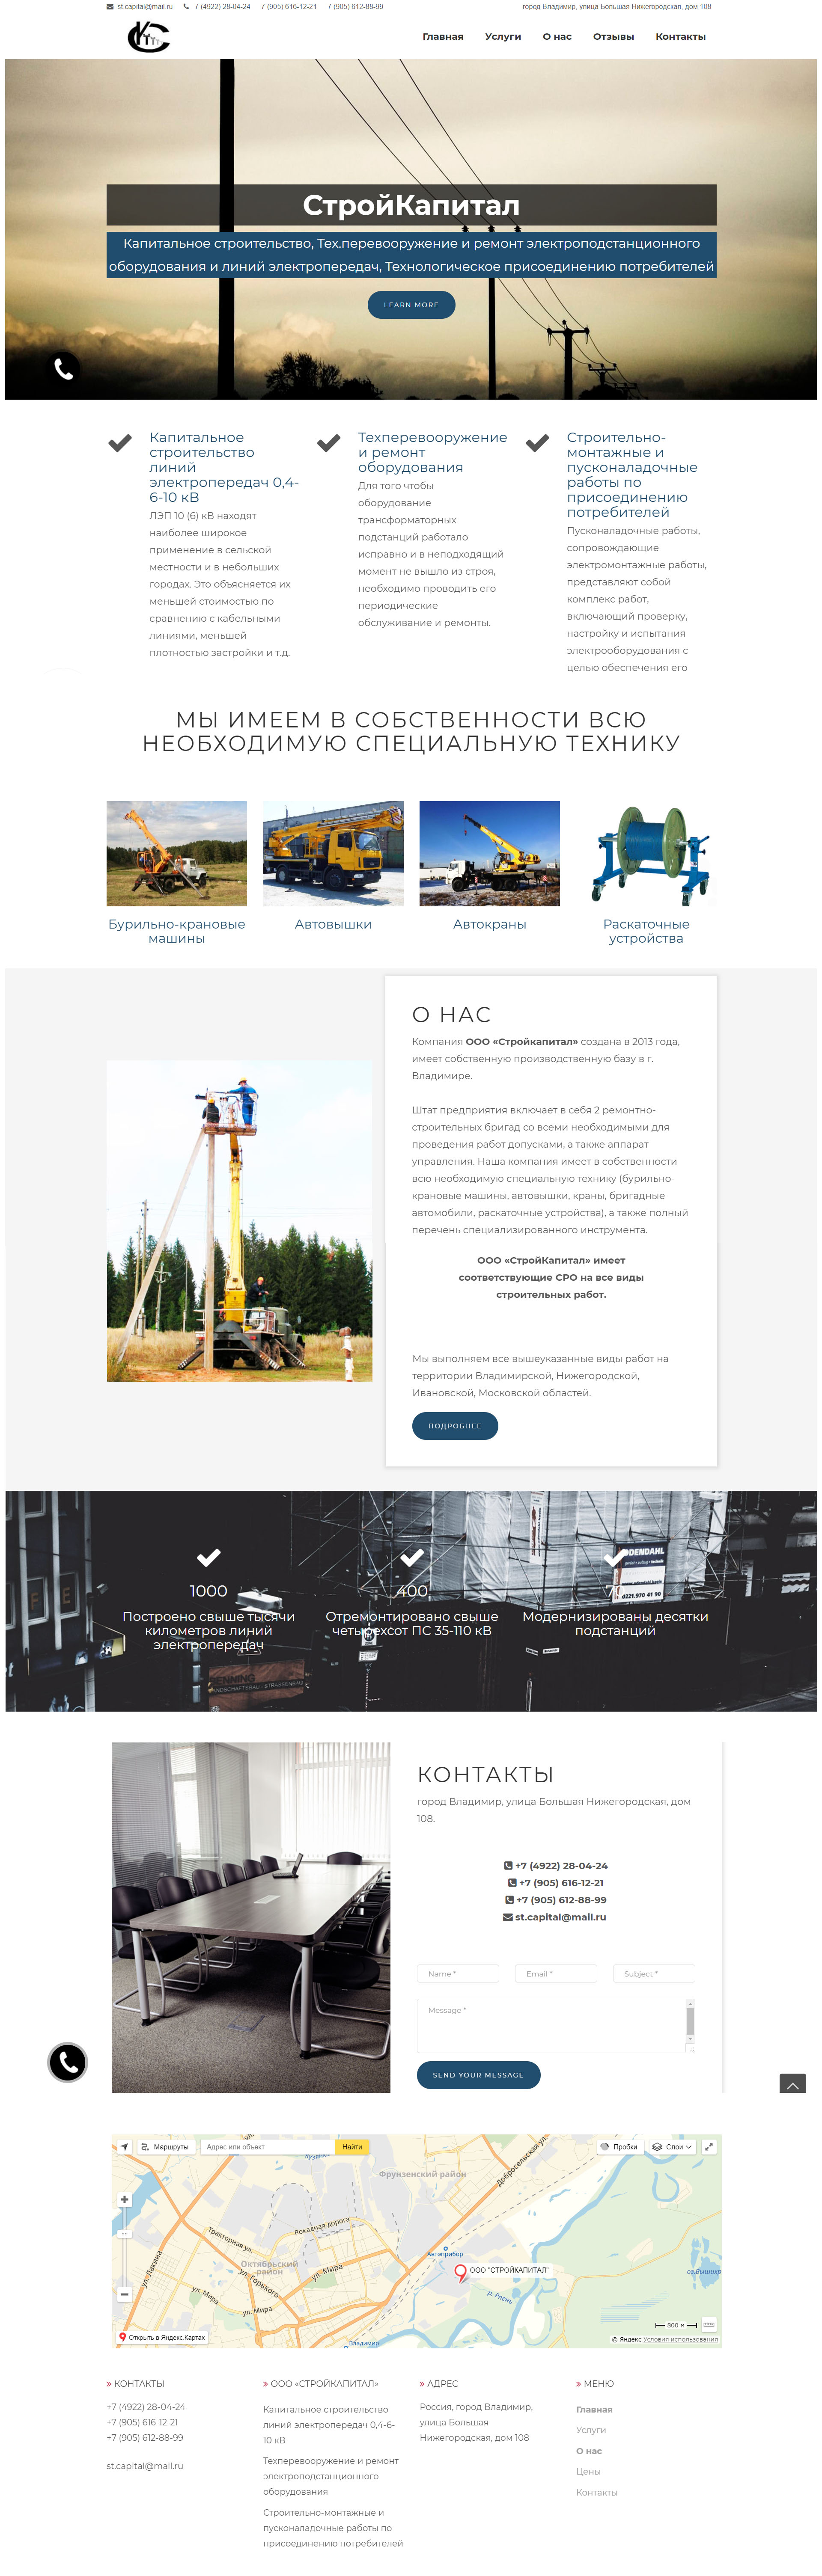 Landing Page - портфолио веб-студии во Владимире